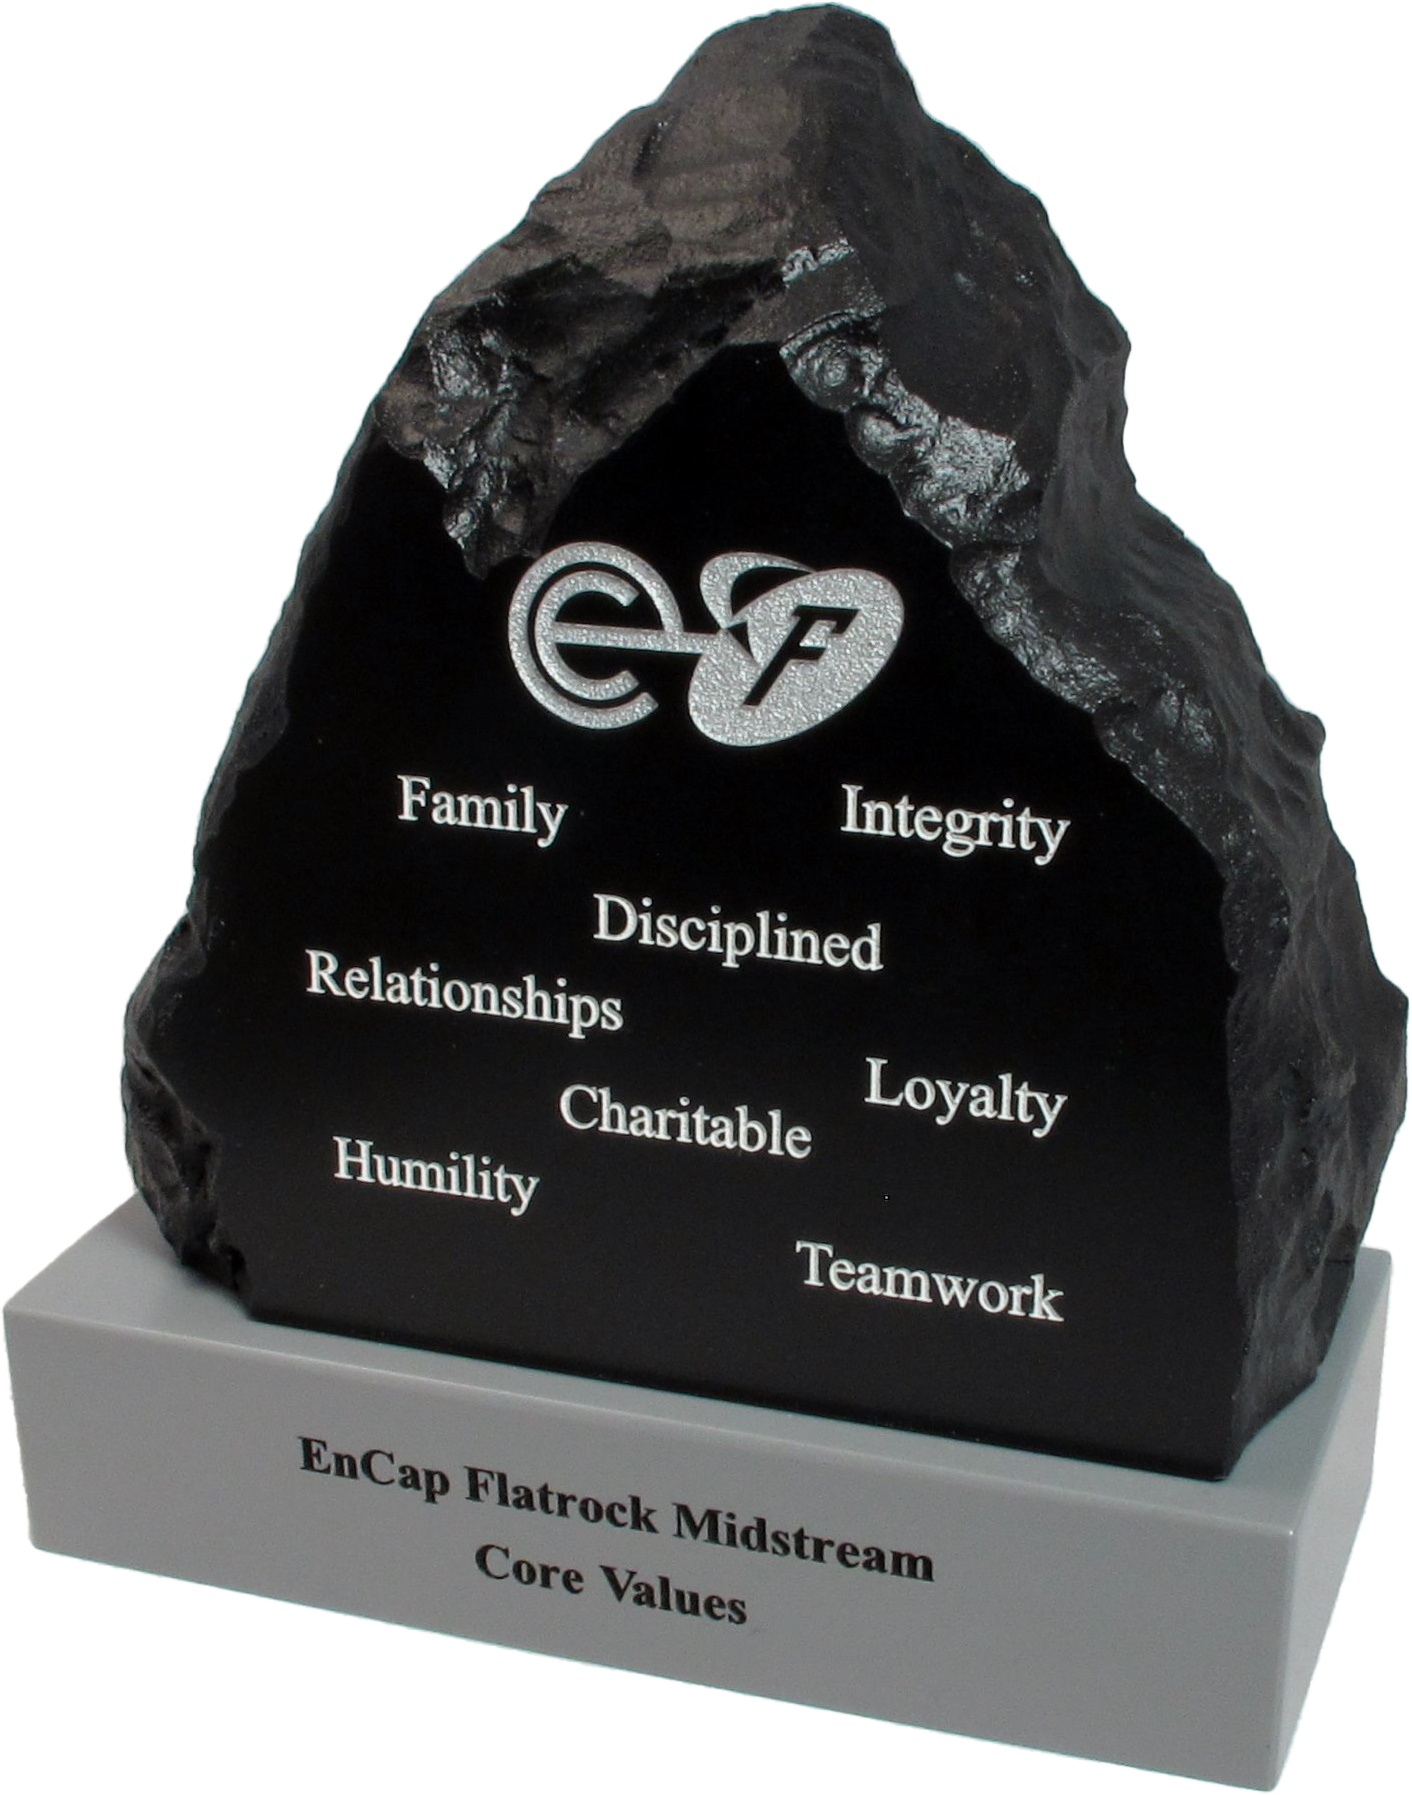 EFM Core Values